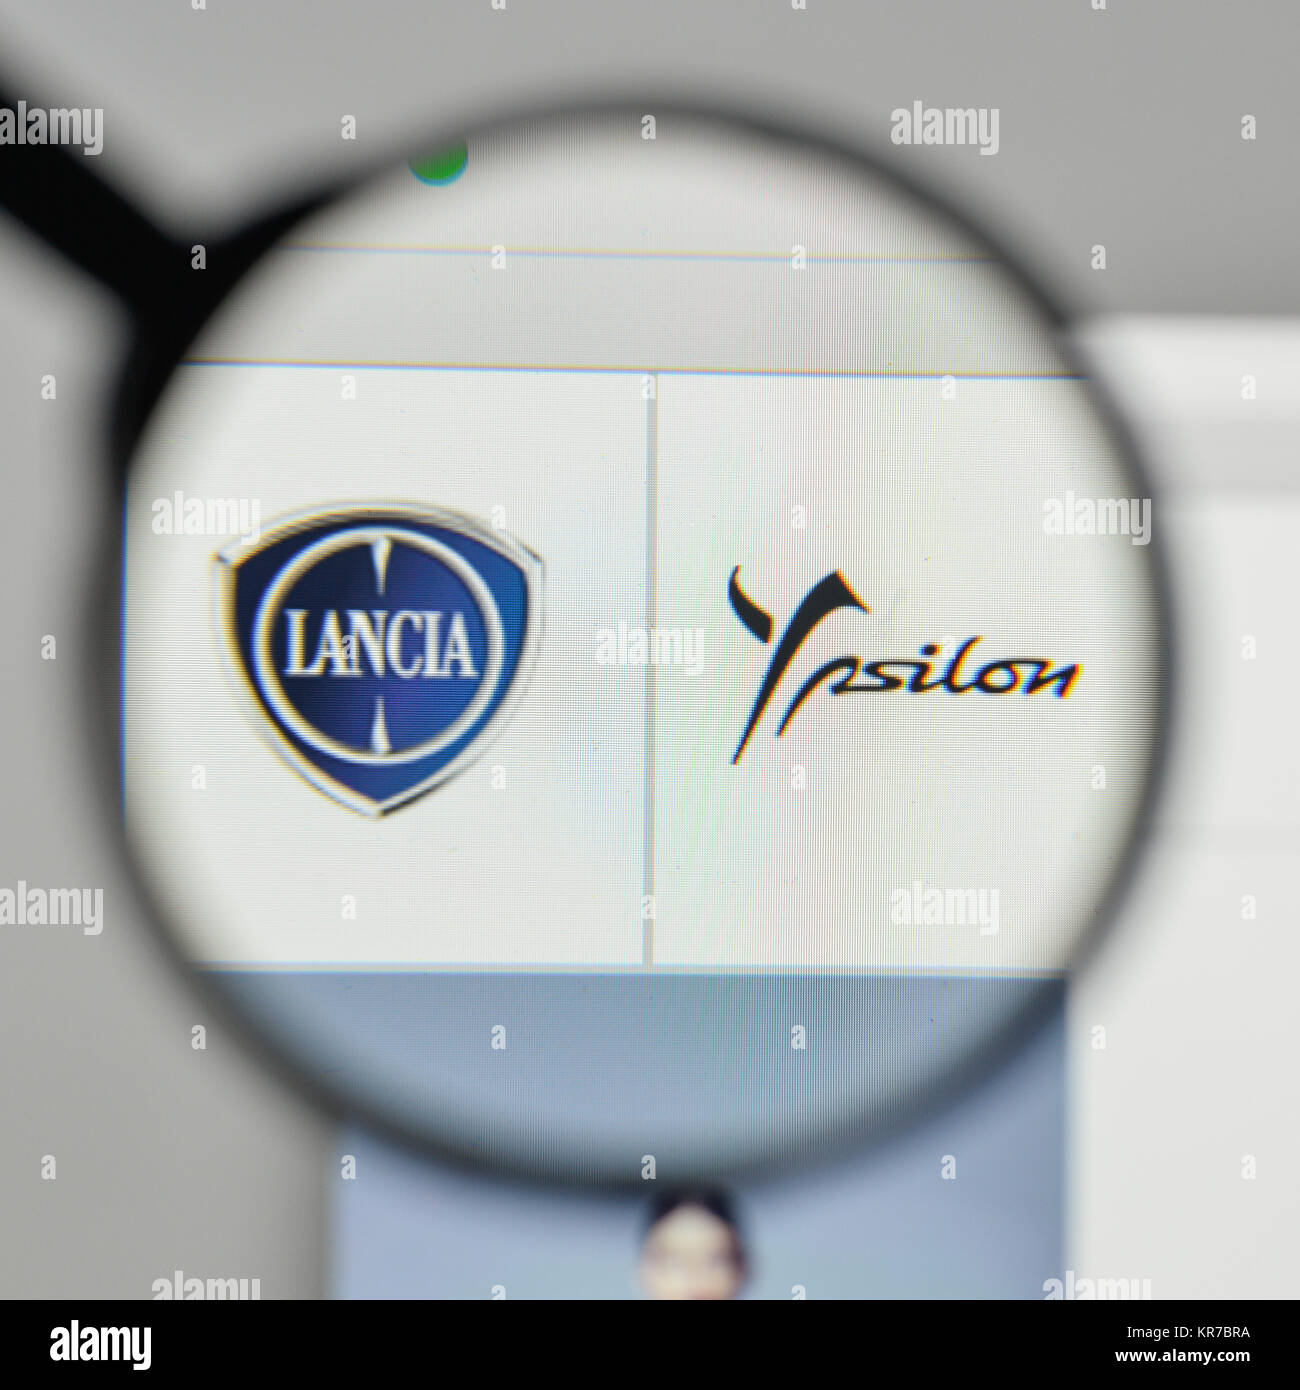 Milan, Italy - November 1, 2017: Lancia logo on the website homepage. Stock Photo